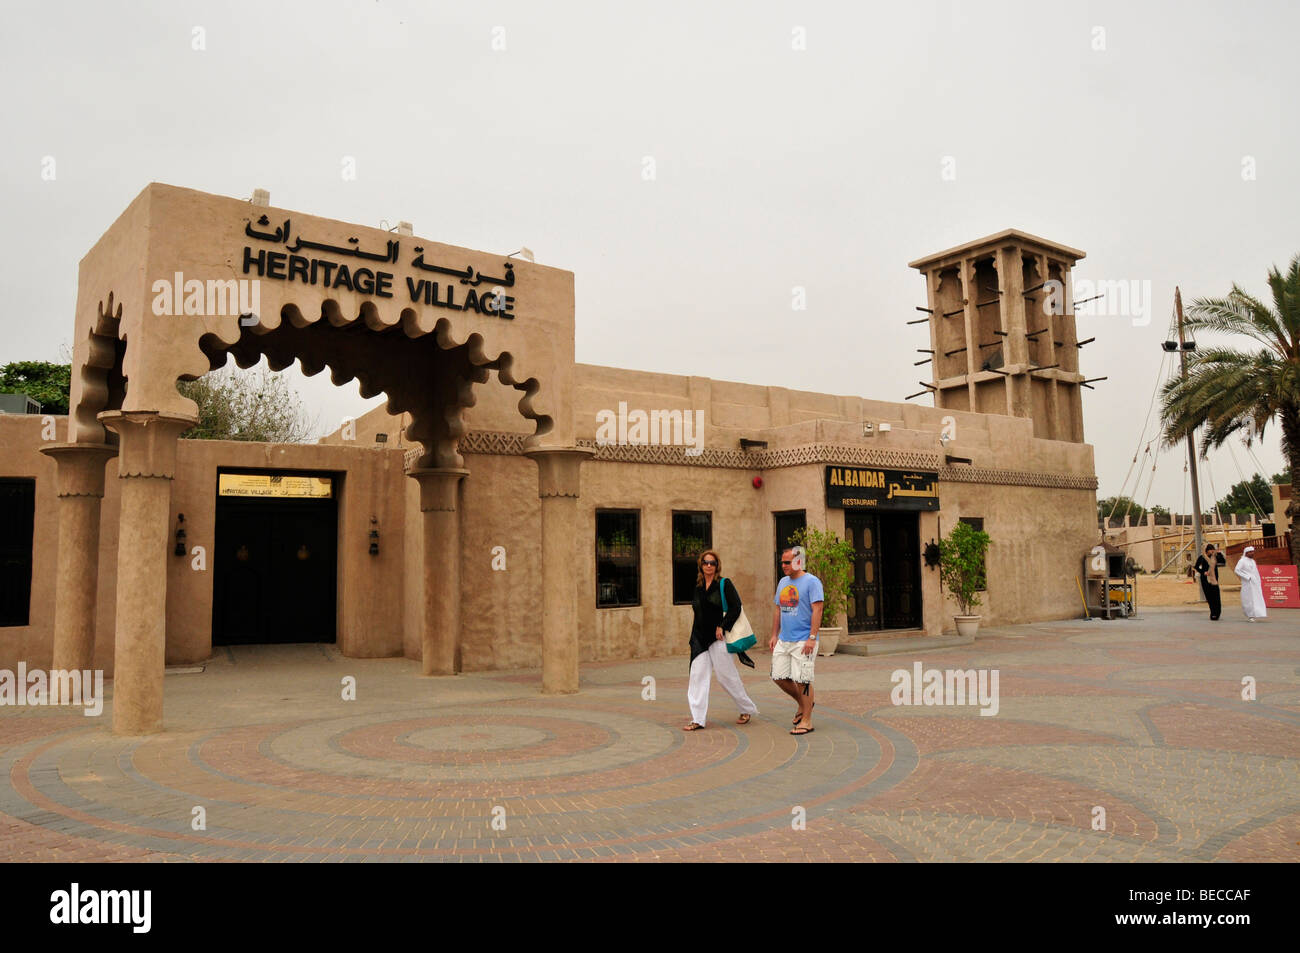 Heritage Village, Dubai, Emirati Arabi Uniti, in Arabia, in Medio Oriente, Orient Foto Stock